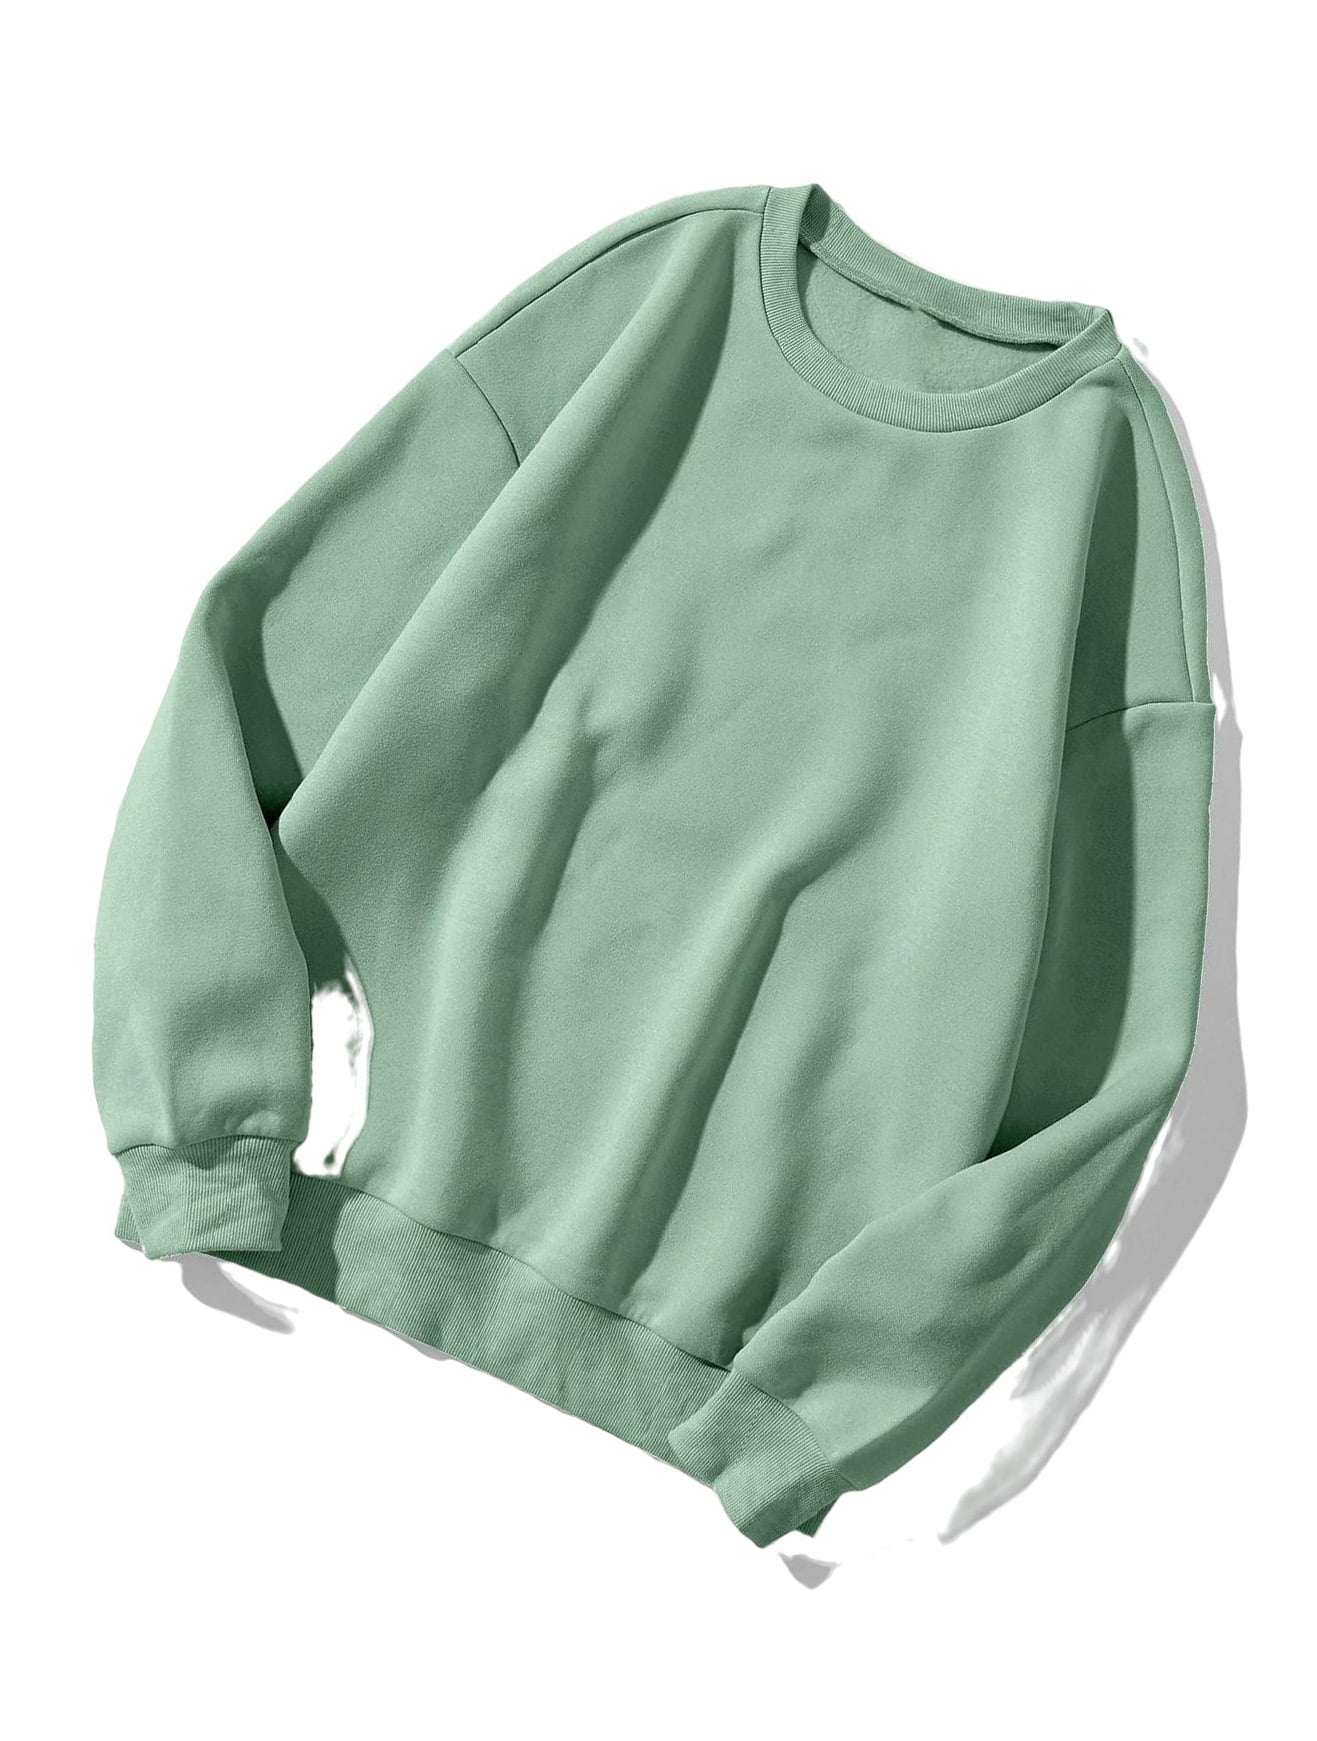 Betsy Trotwood pot Vlucht Women's Plus Size Sweatshirts Casual Plain Round Neck Pullovers Mint Green  2XL - Walmart.com